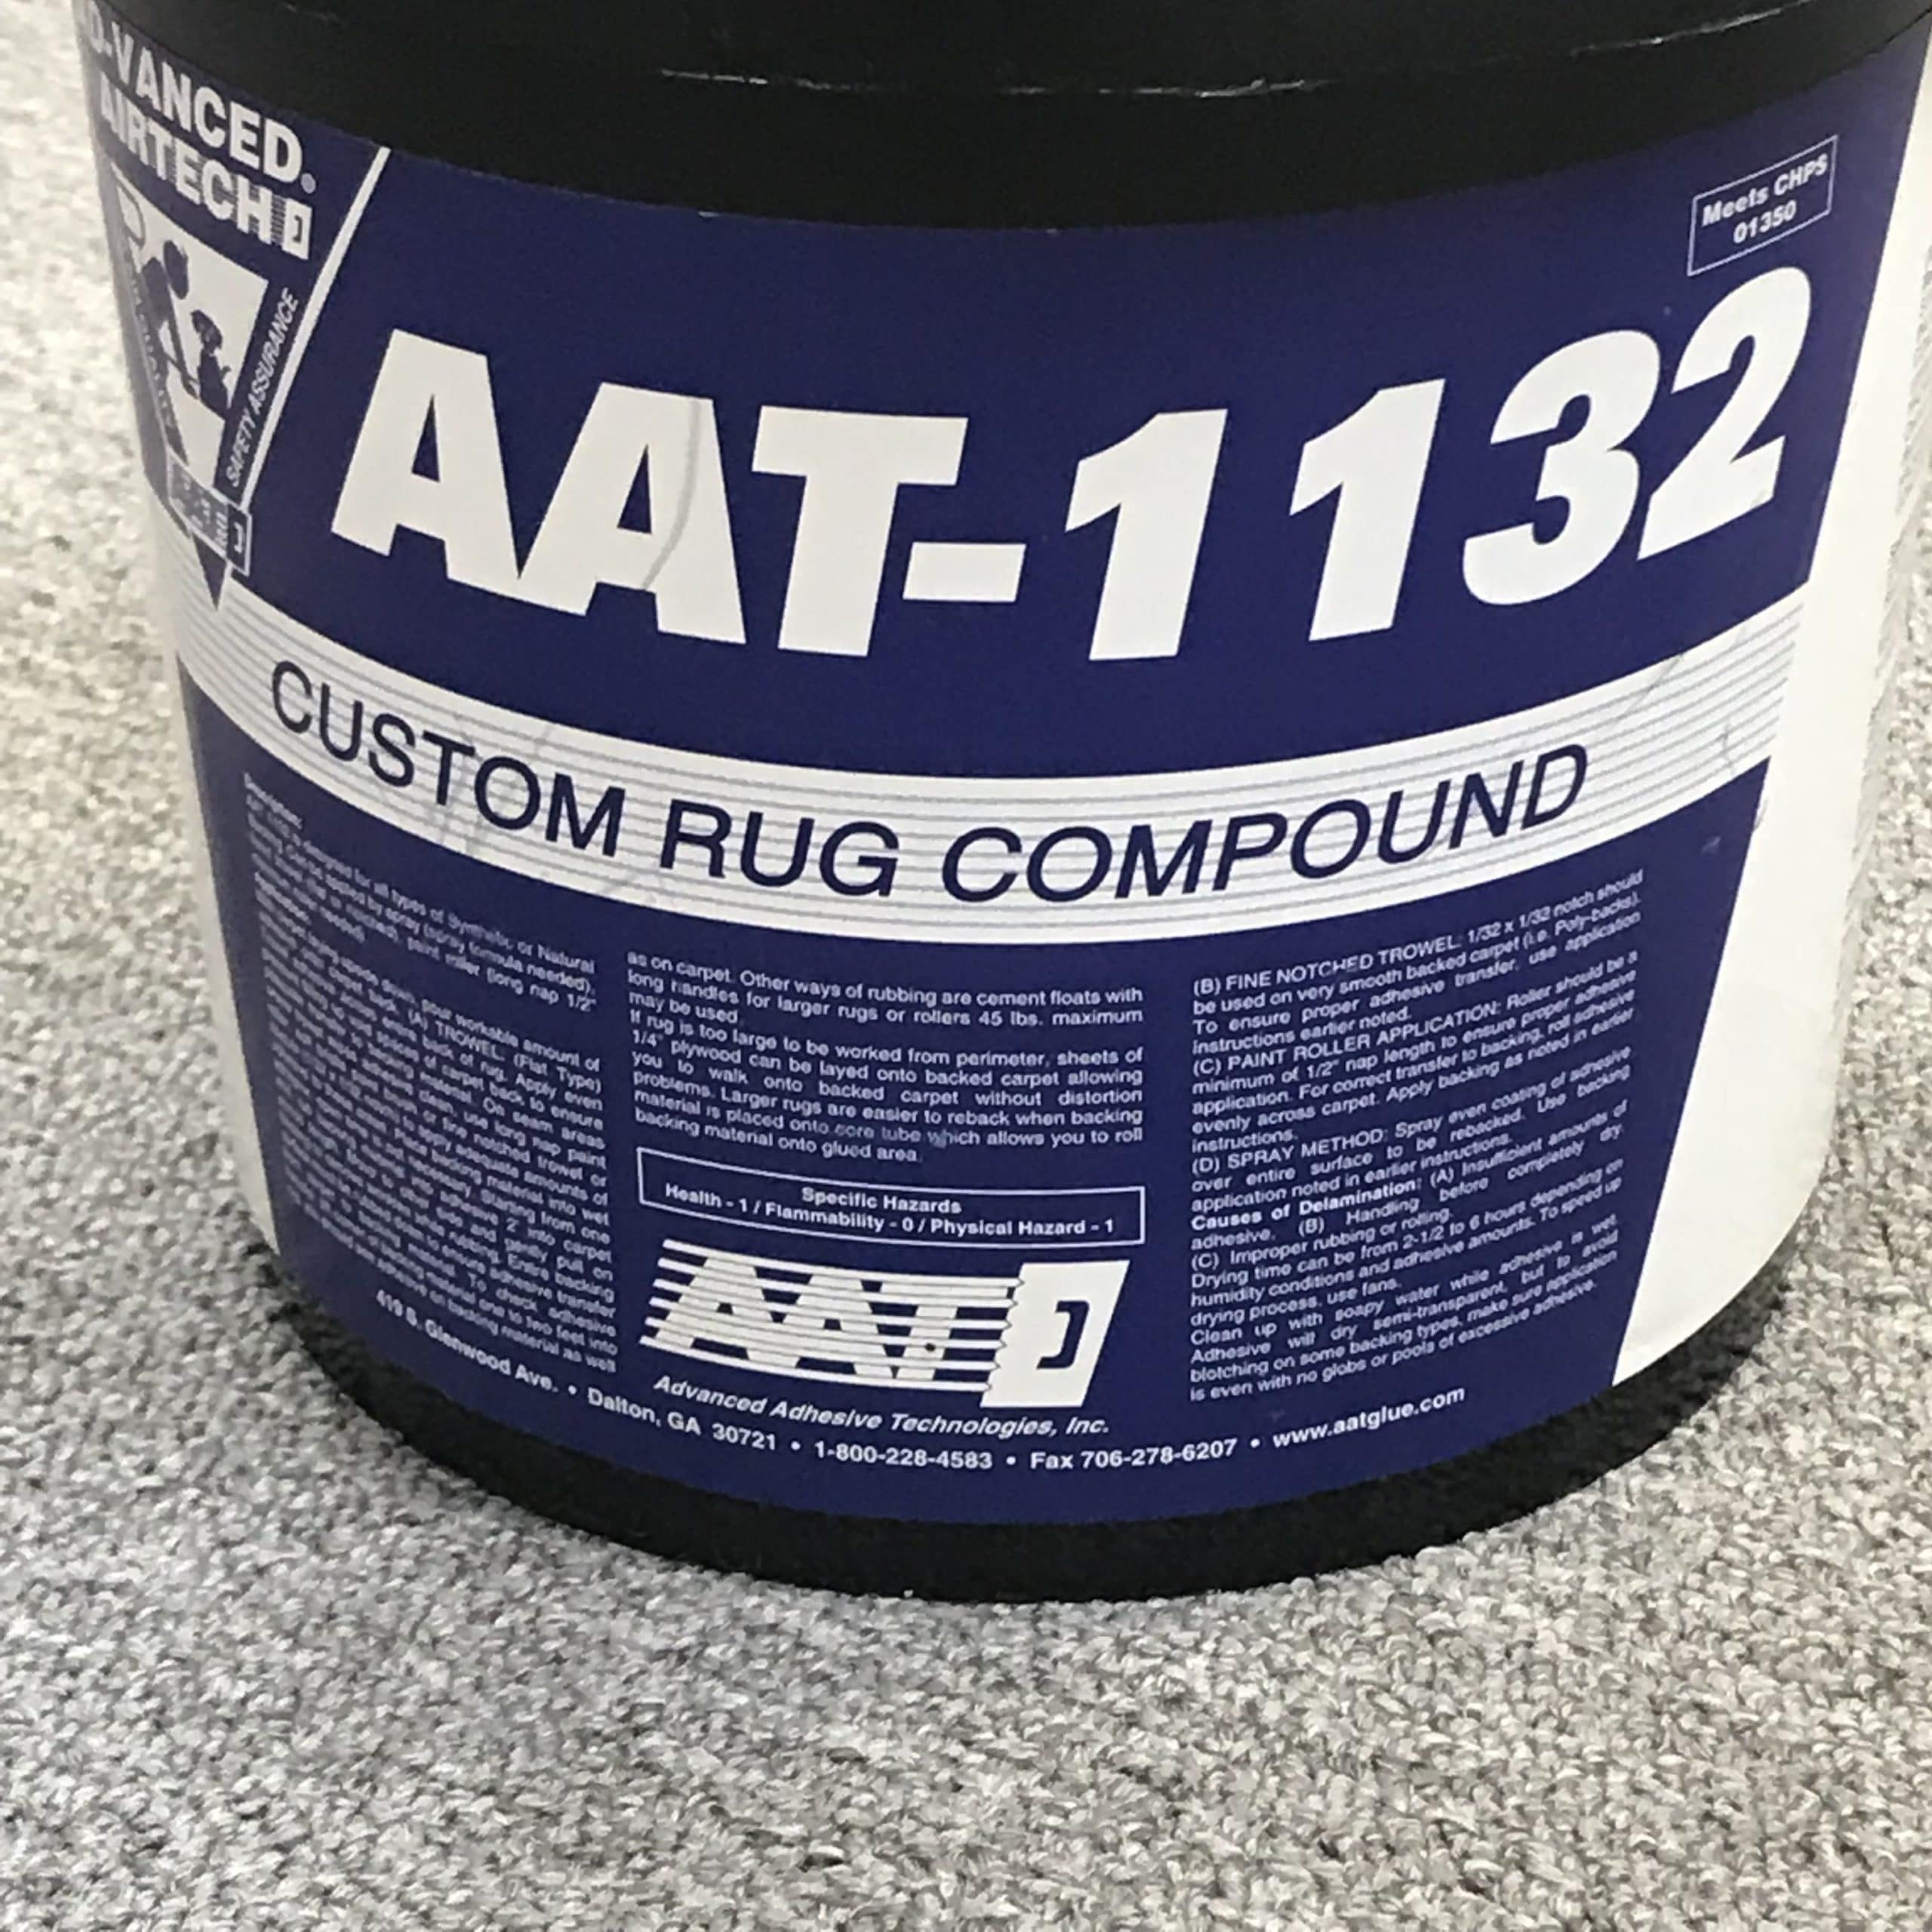 1132 Synthetic Latex Custom Rug Compound 1 Gallon jug - Bond Products Inc